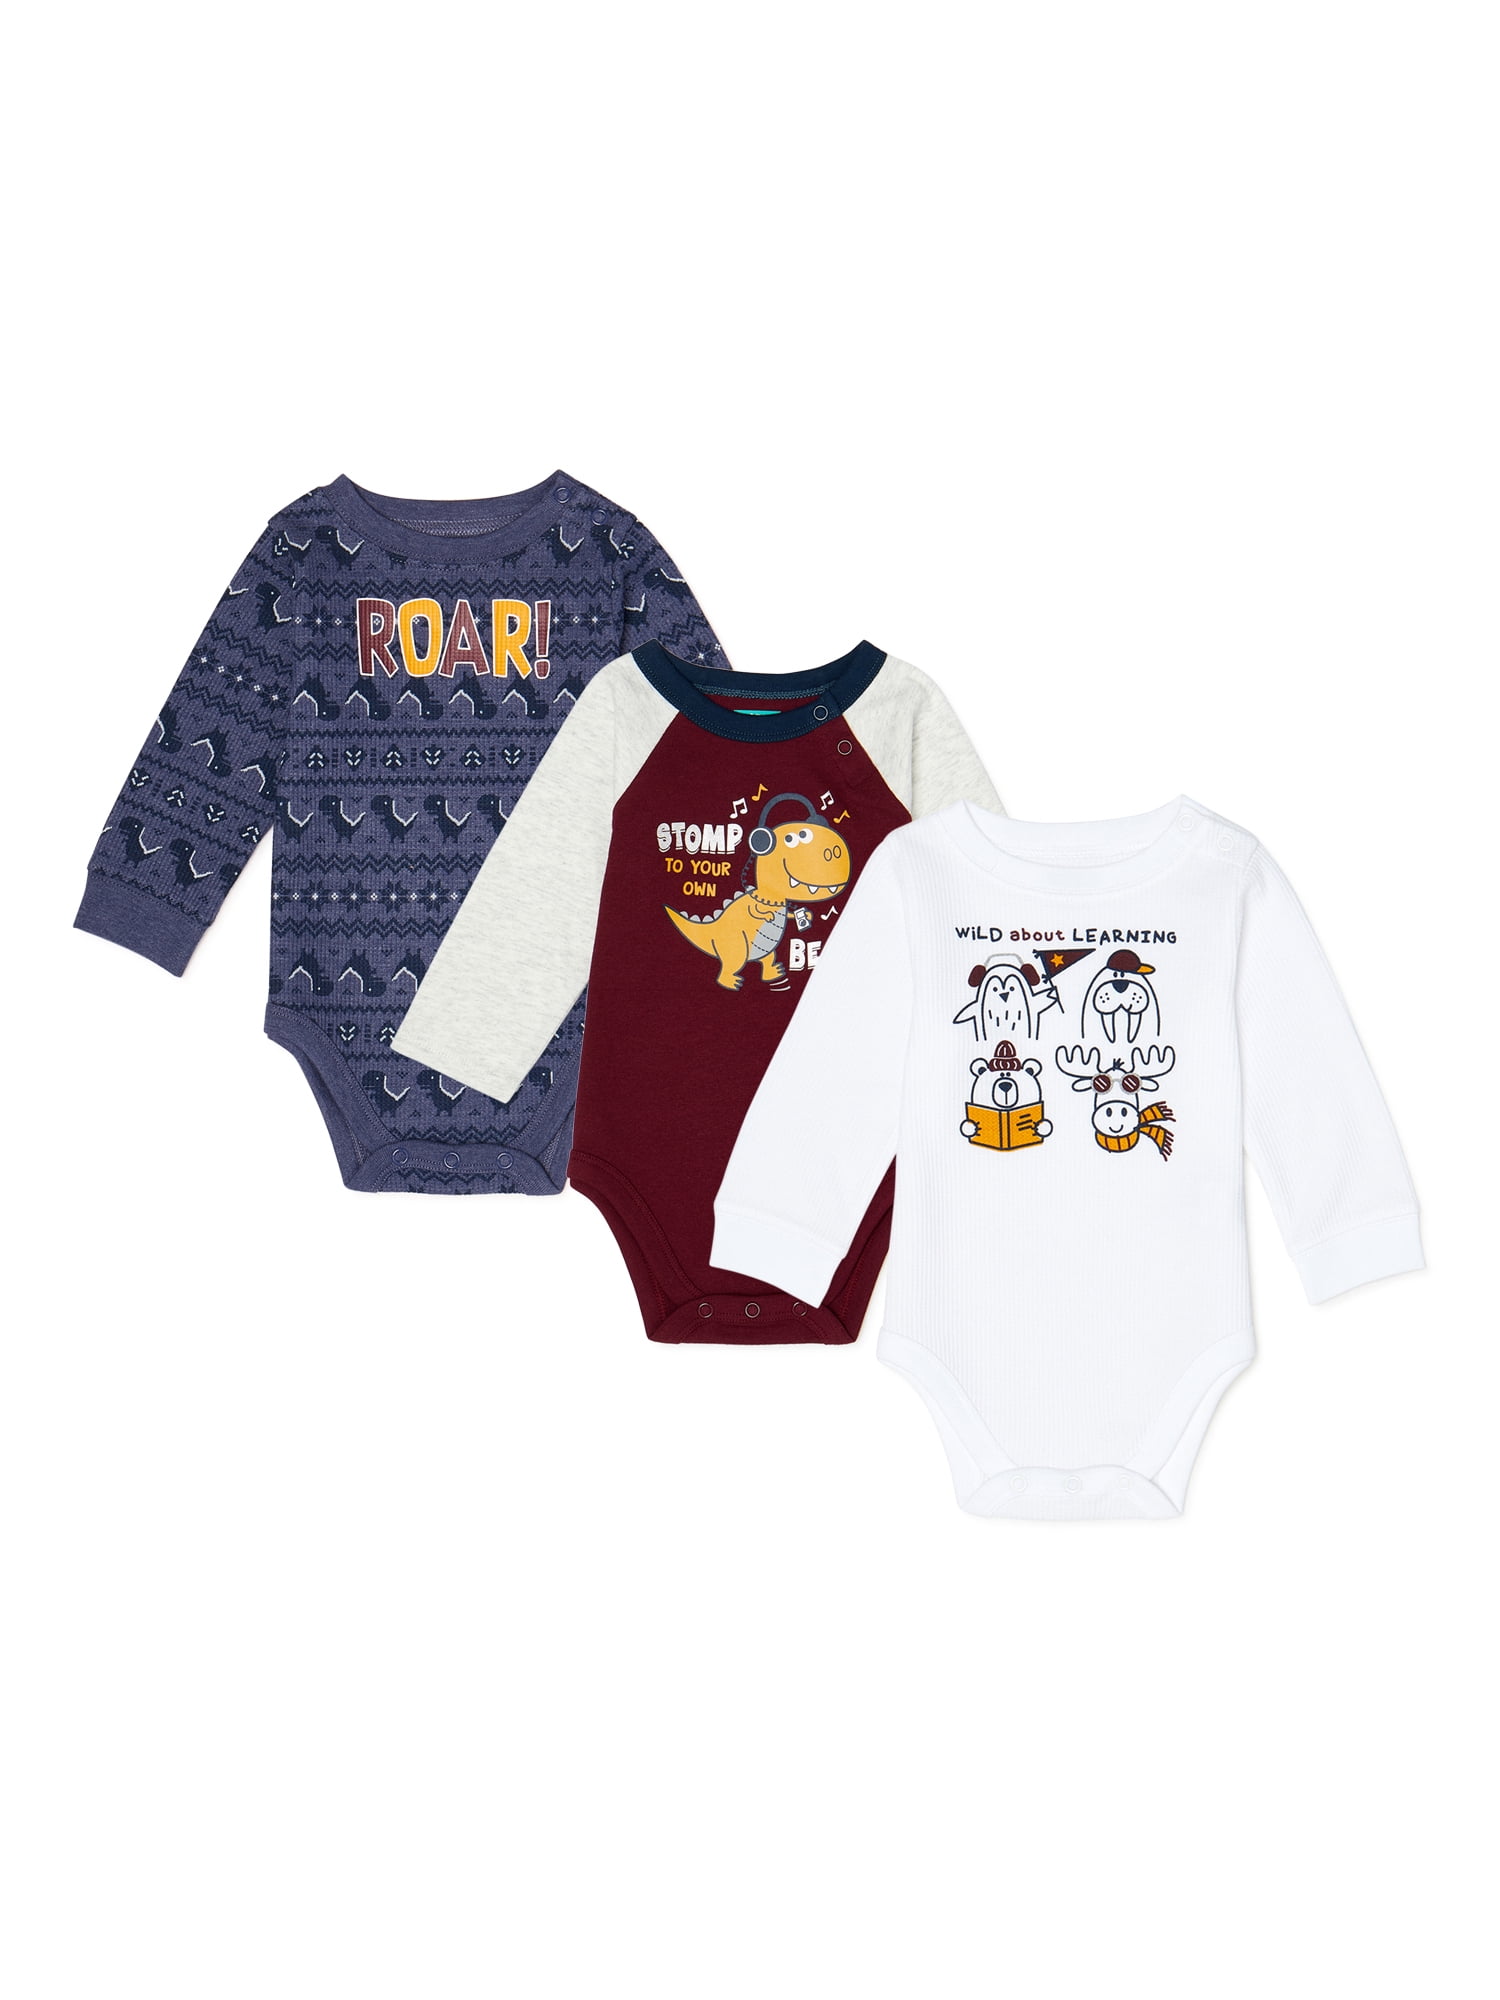 Baby boy clothes 18-24 months bundle 